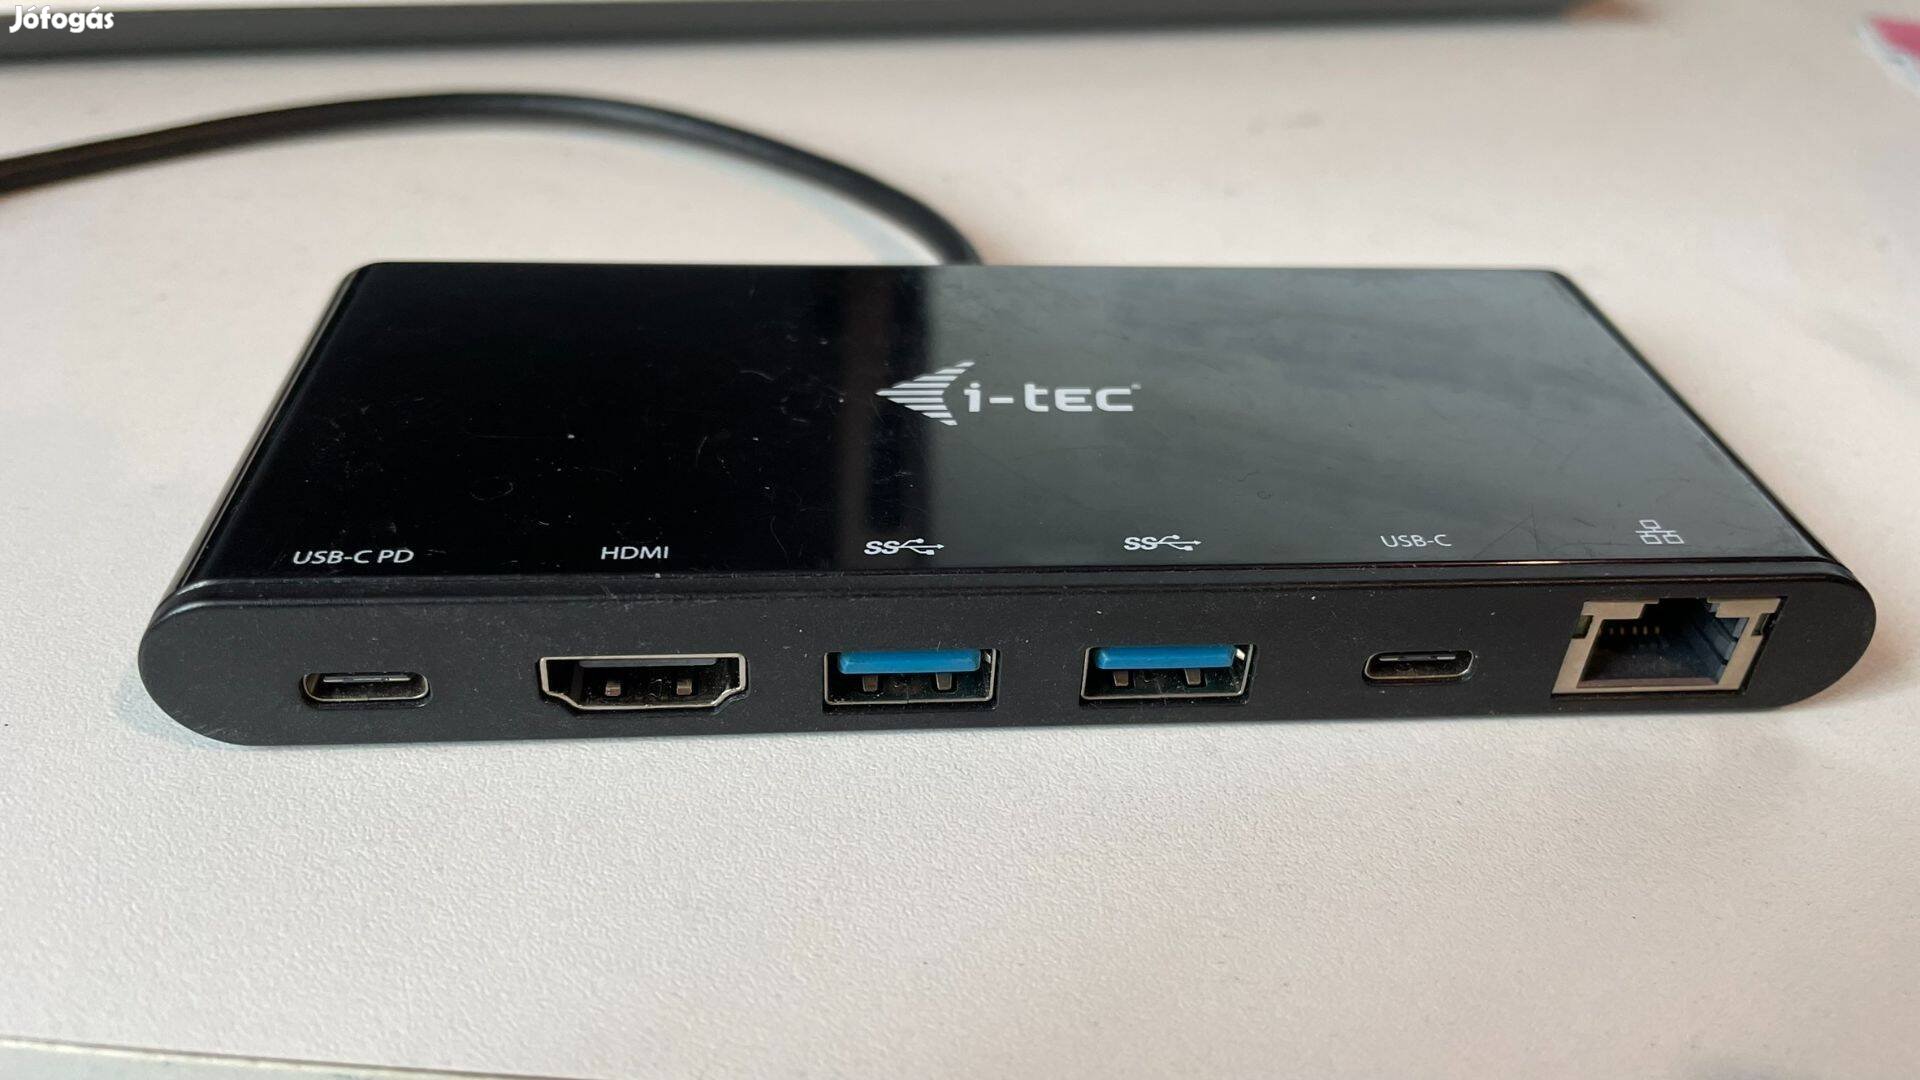 I-tec USB-C Mini Docking Station